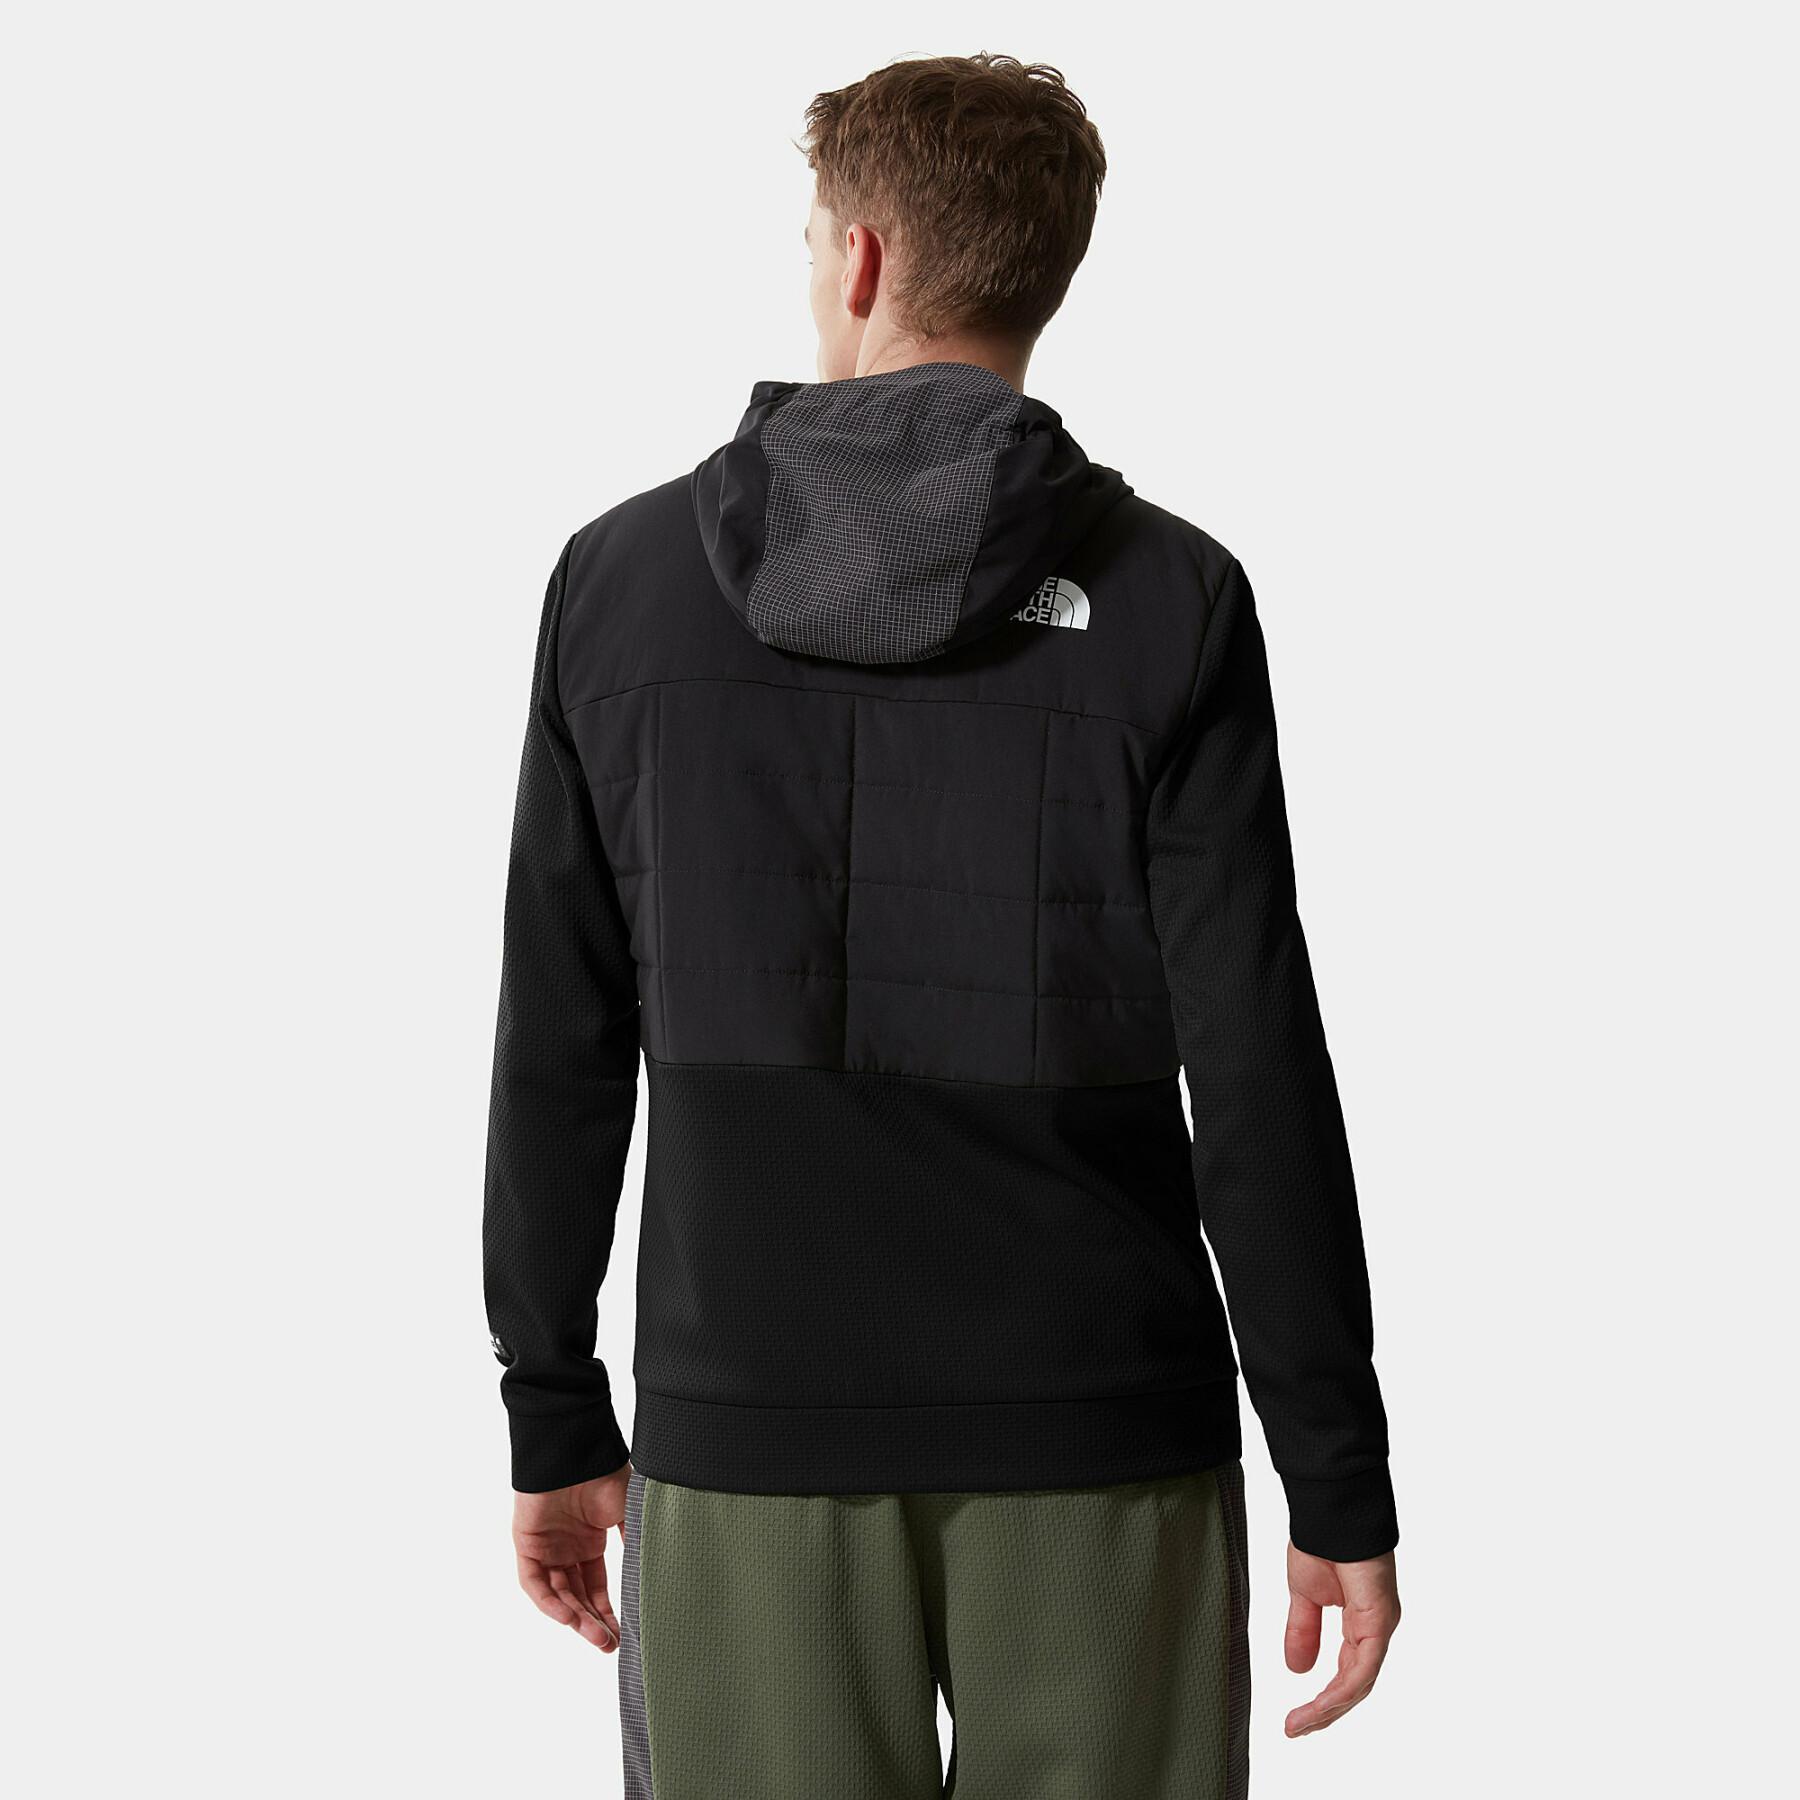 Hybrid fleece jacket The North Face Mountain Athletics